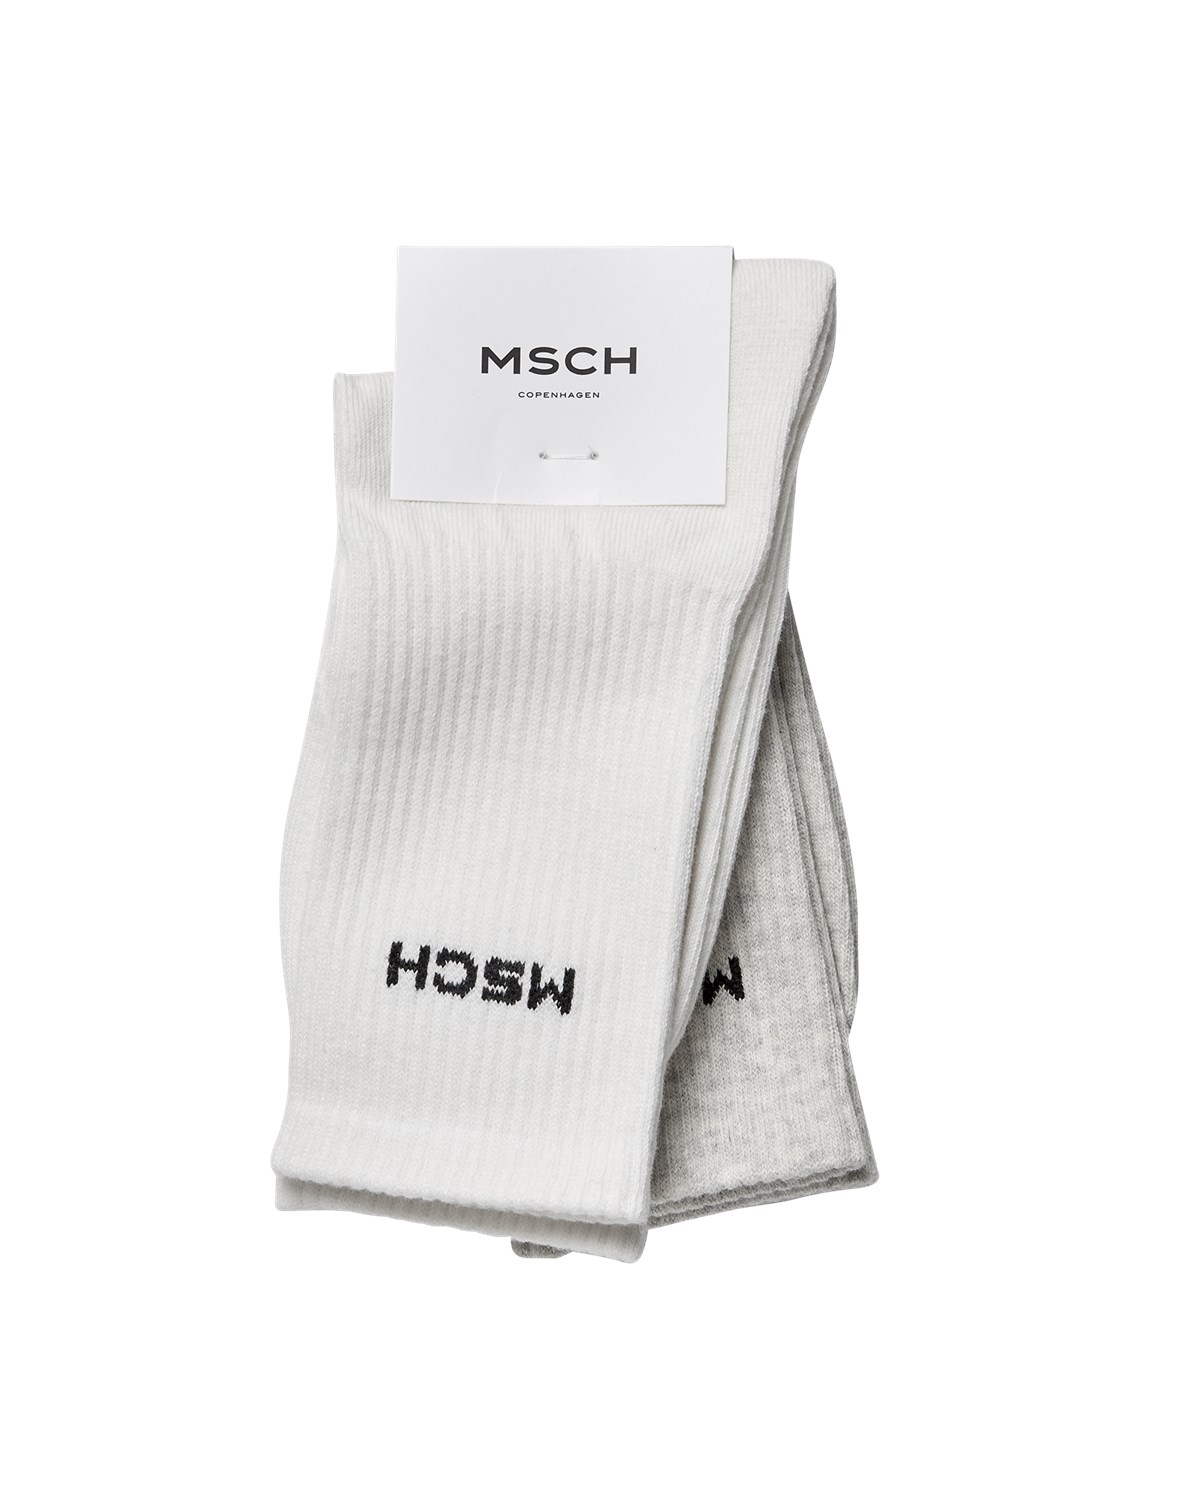 mschsporty logo socks_18031_1_white lgm